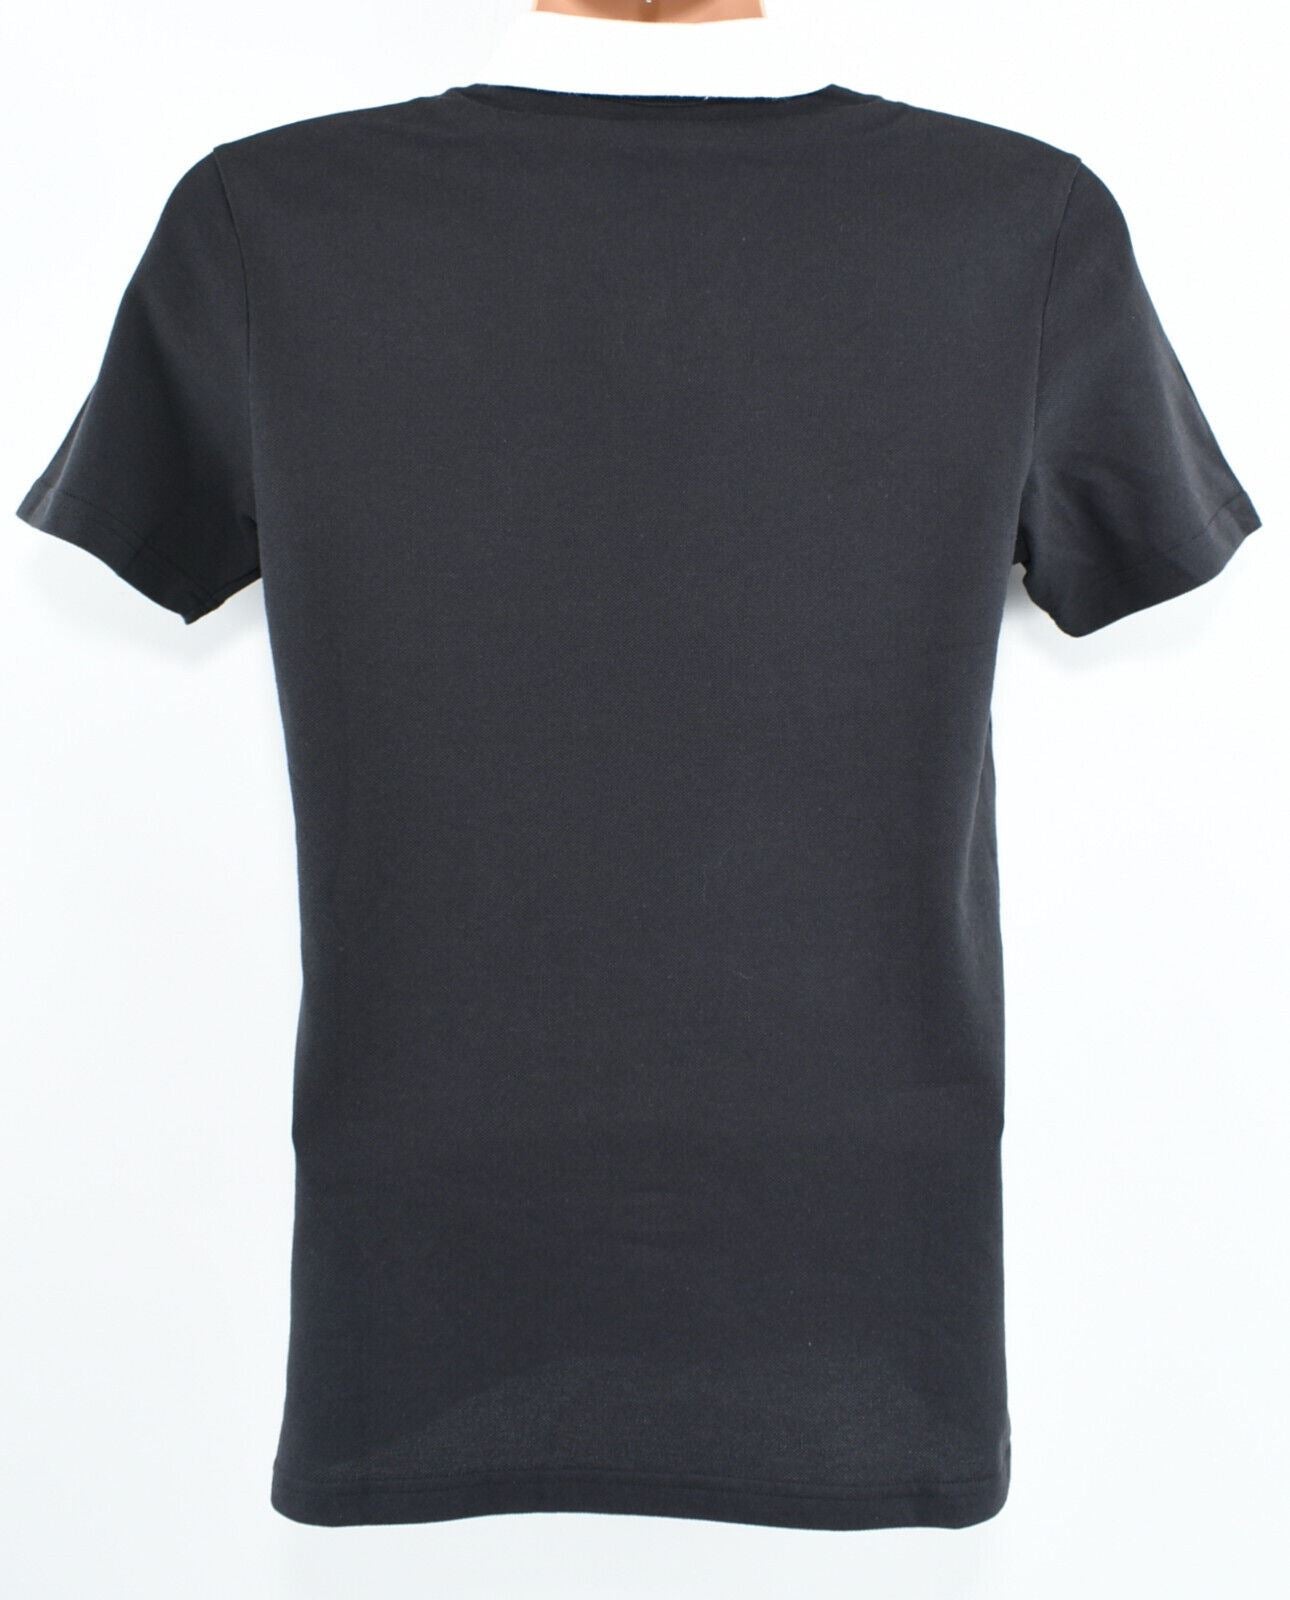 ADIDAS Condivo 18 Men's Performance Polo Shirt, Black, size SMALL